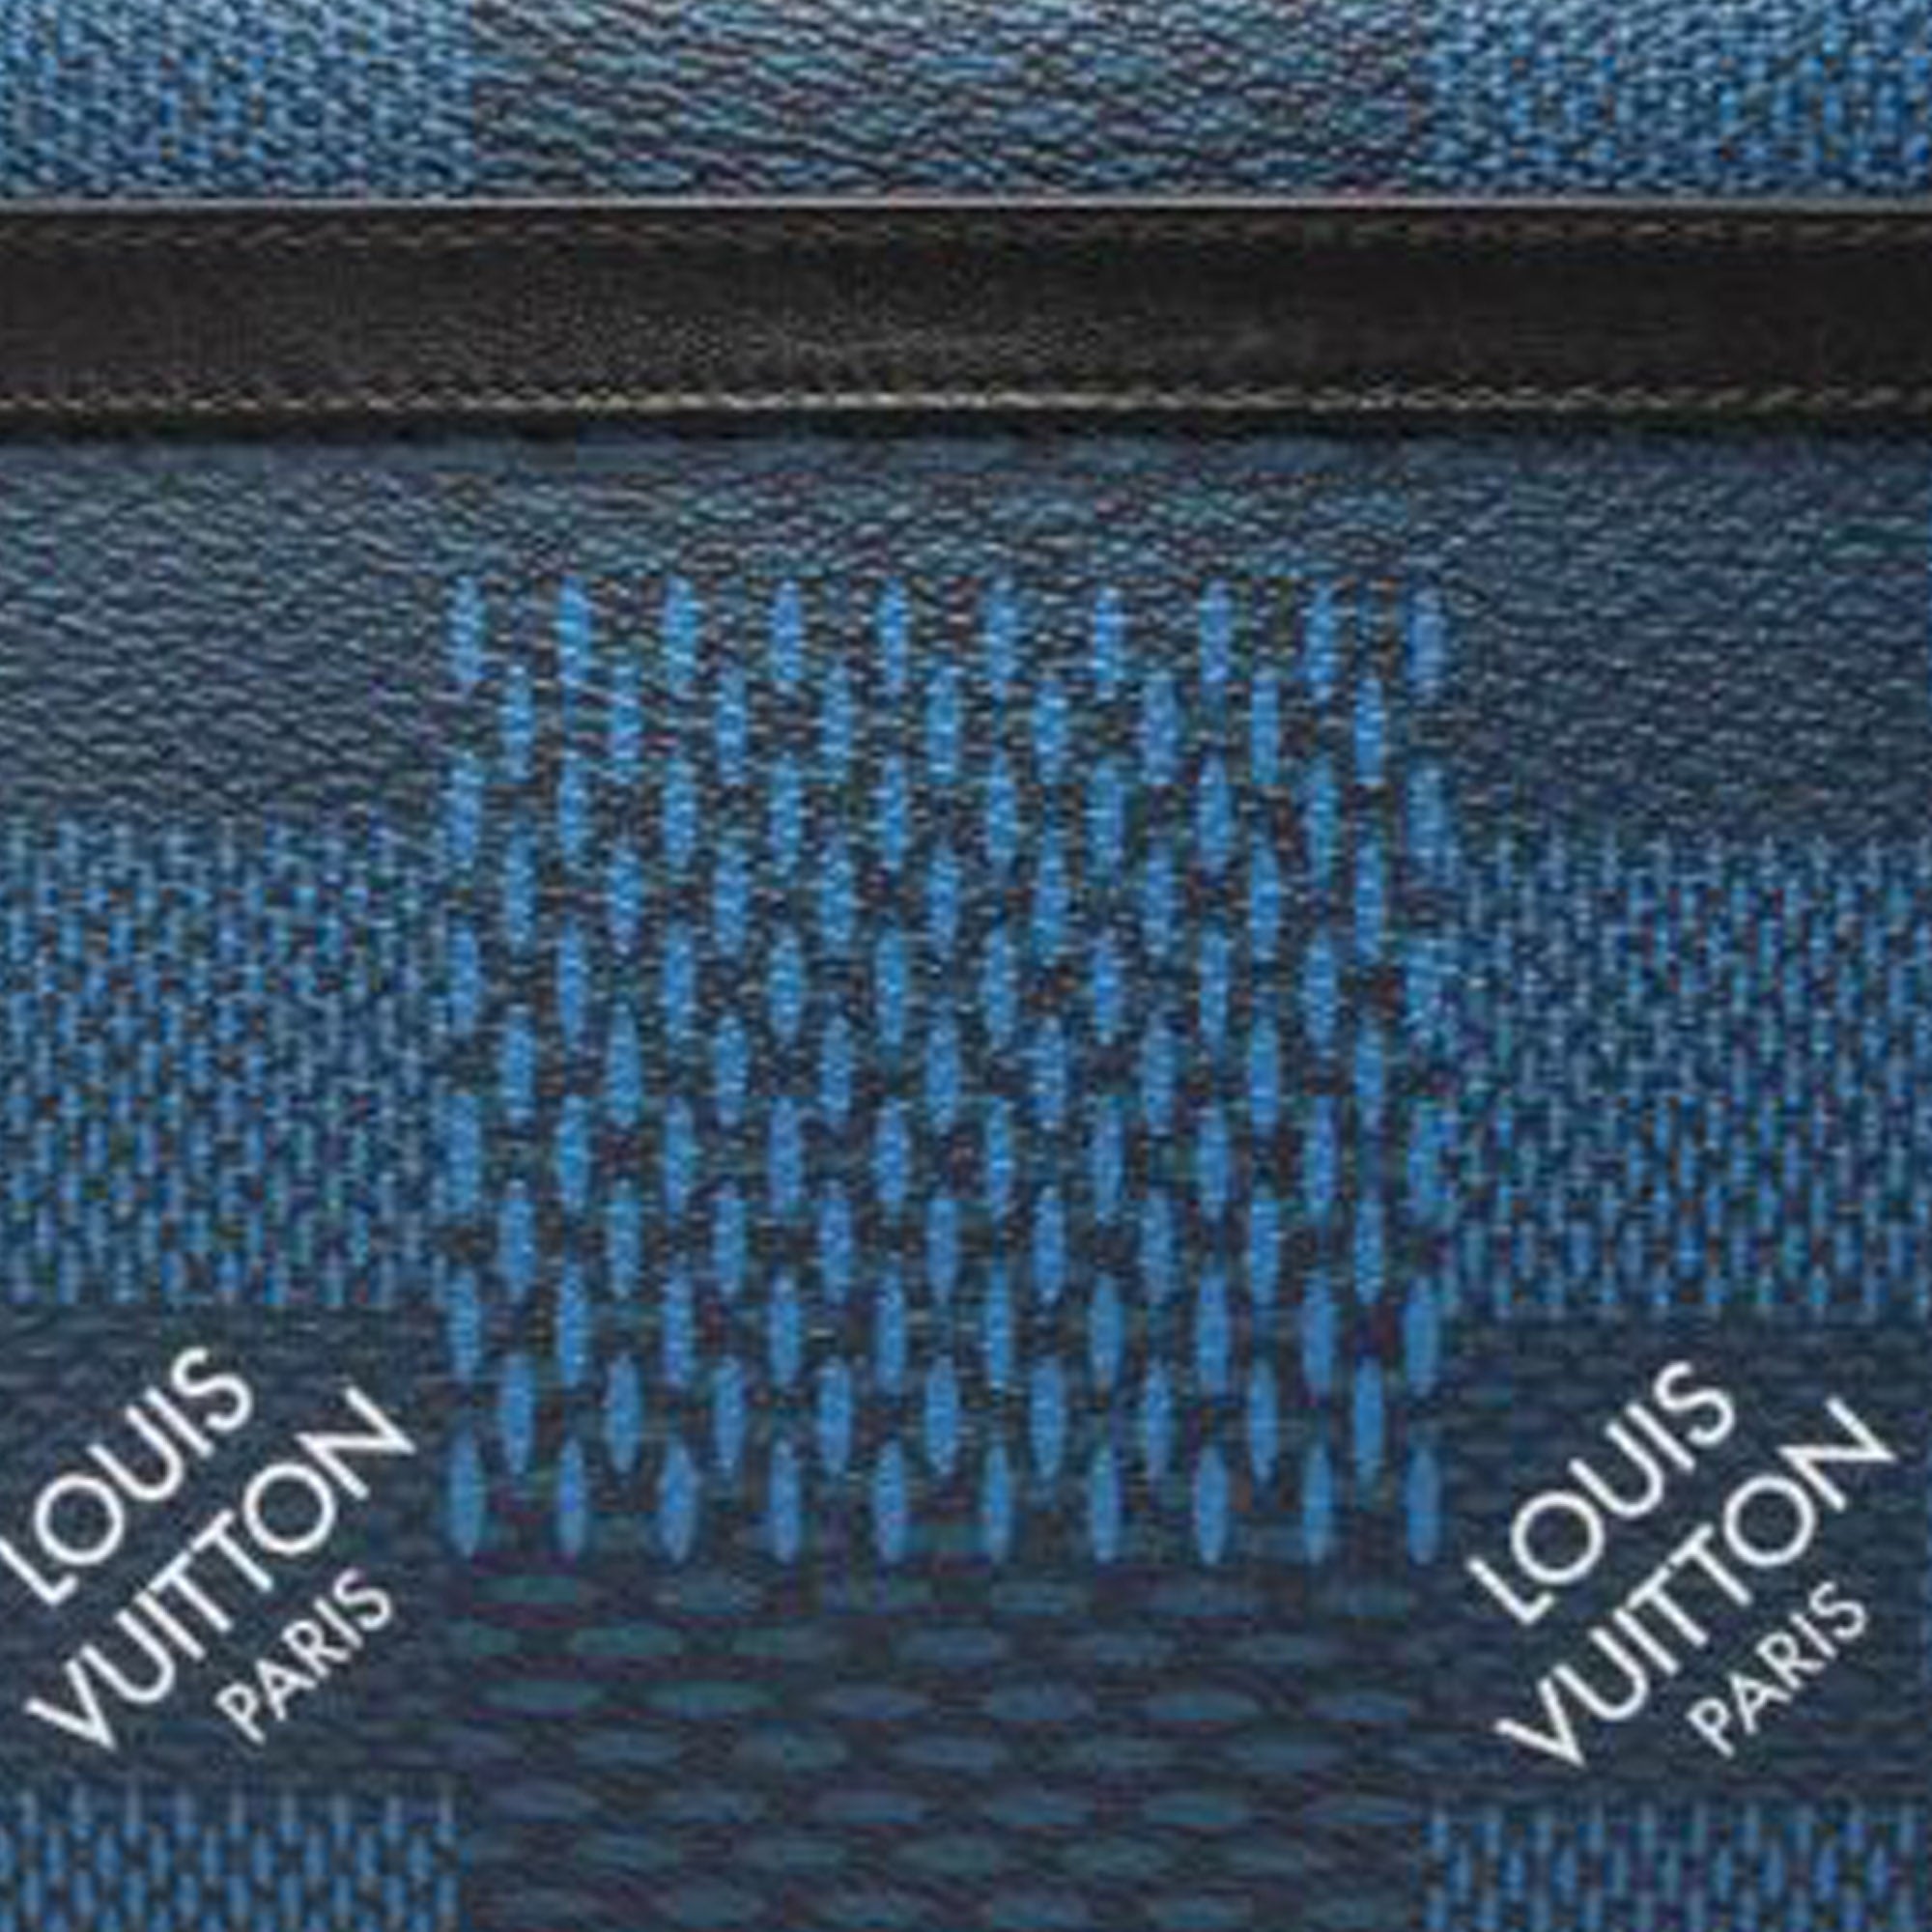 Louis Vuitton 2021 pre-owned Damier Graphite Studio Messenger Bag - Farfetch